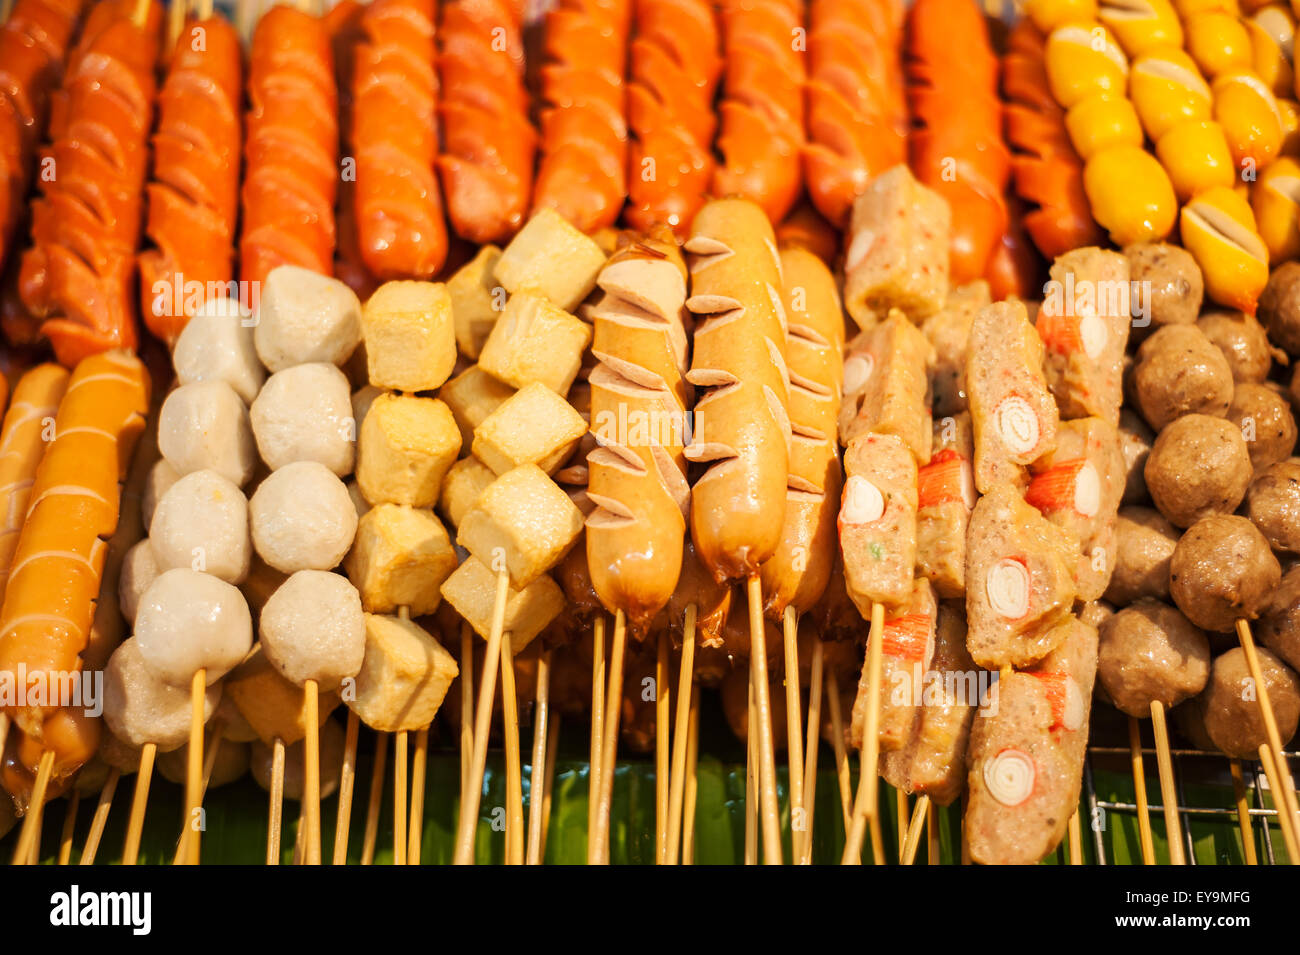 Asia style fried sausage sticks as a popular street food Stock Photo